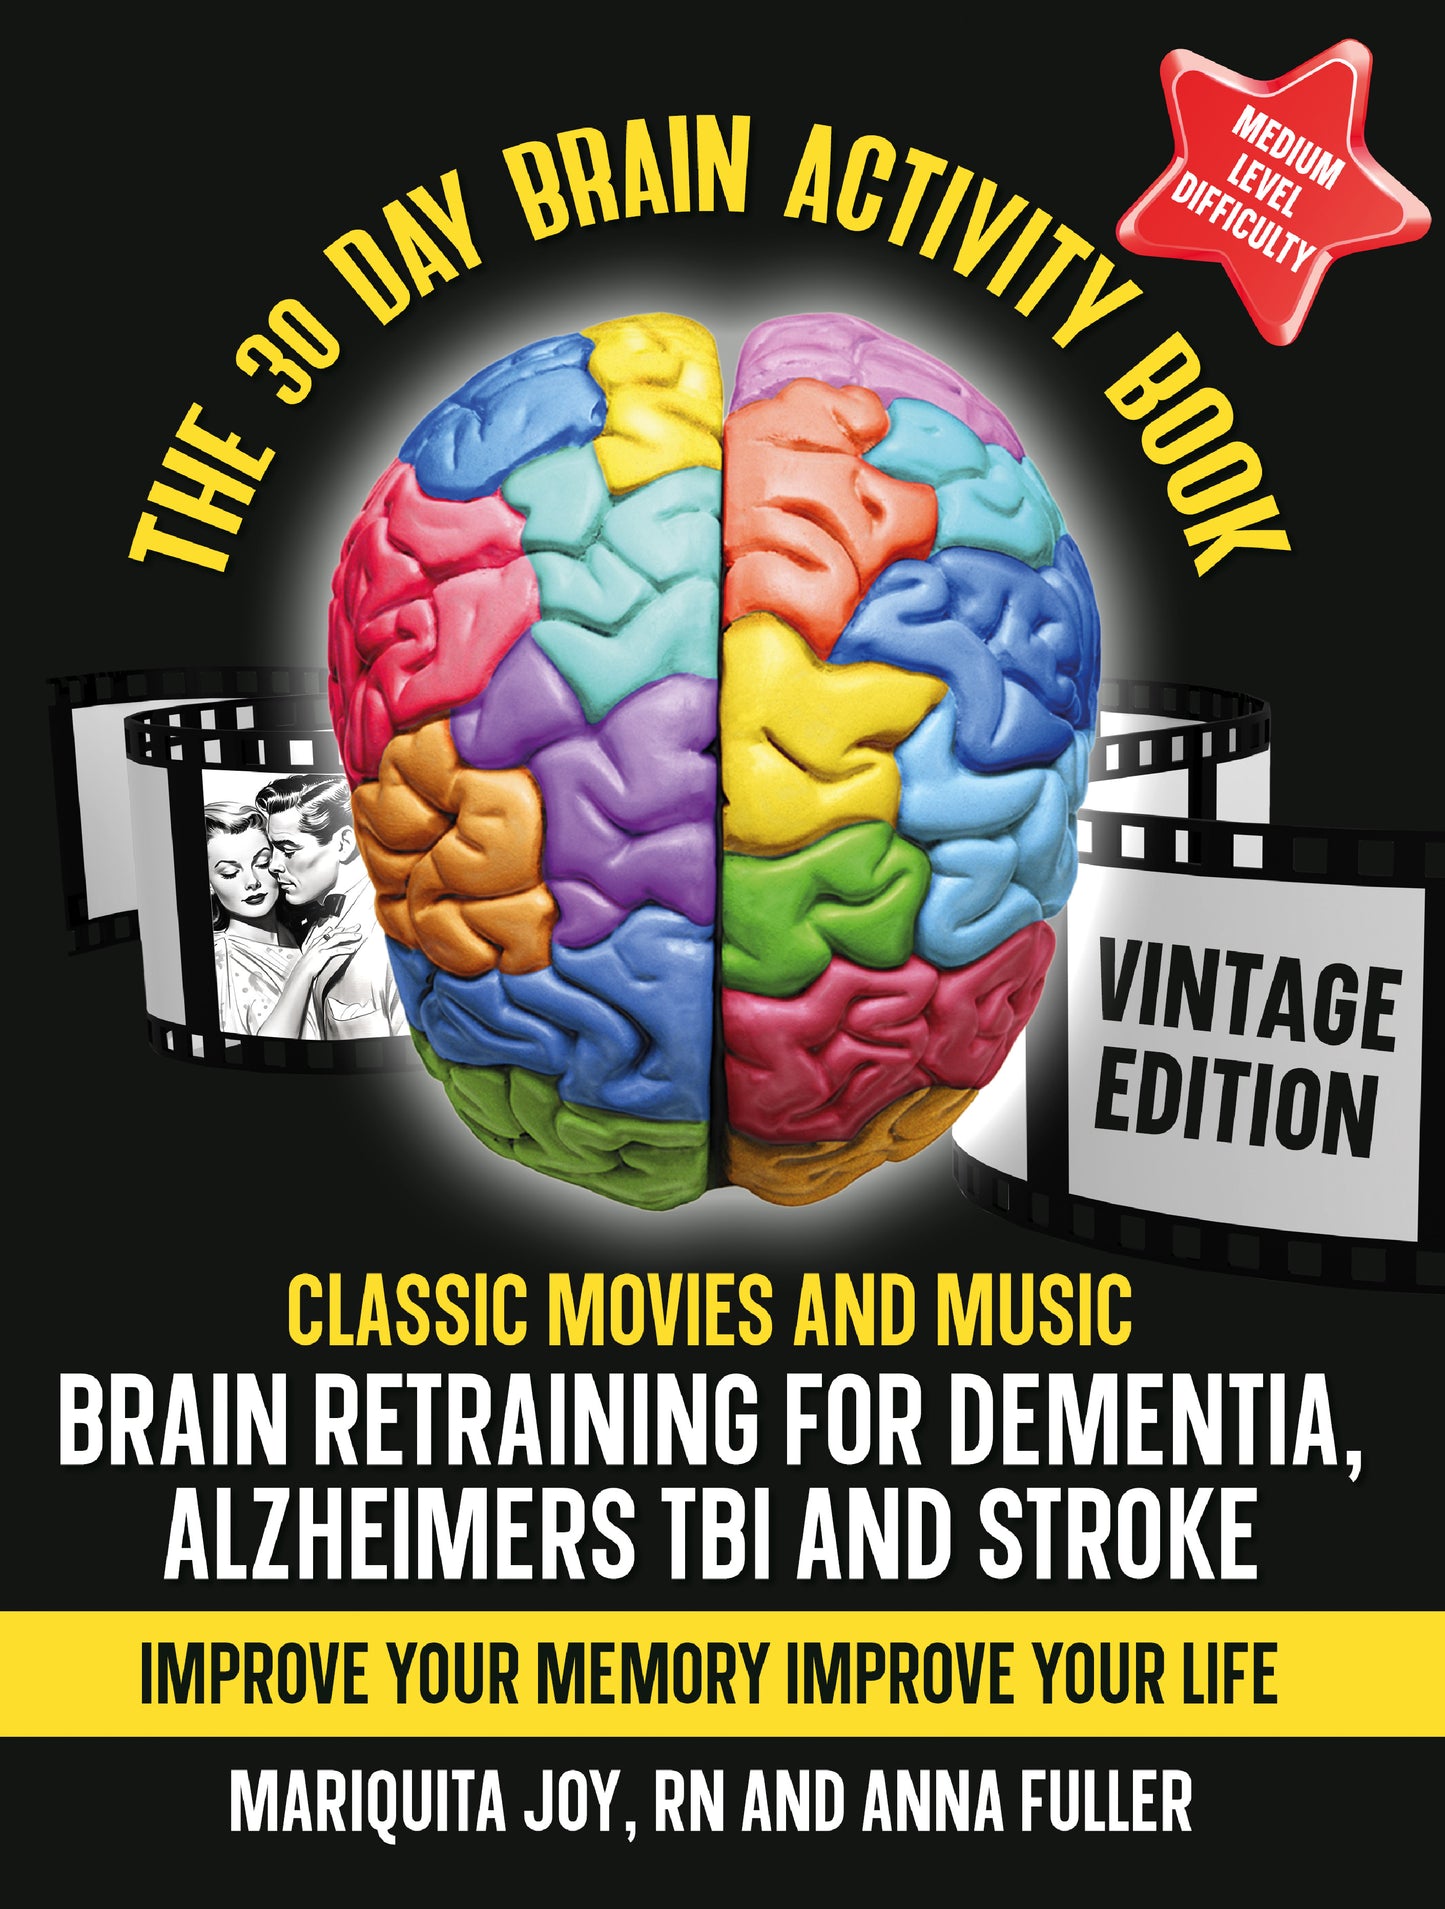 A 30 Day Brain Activity Book - Vintage Edition